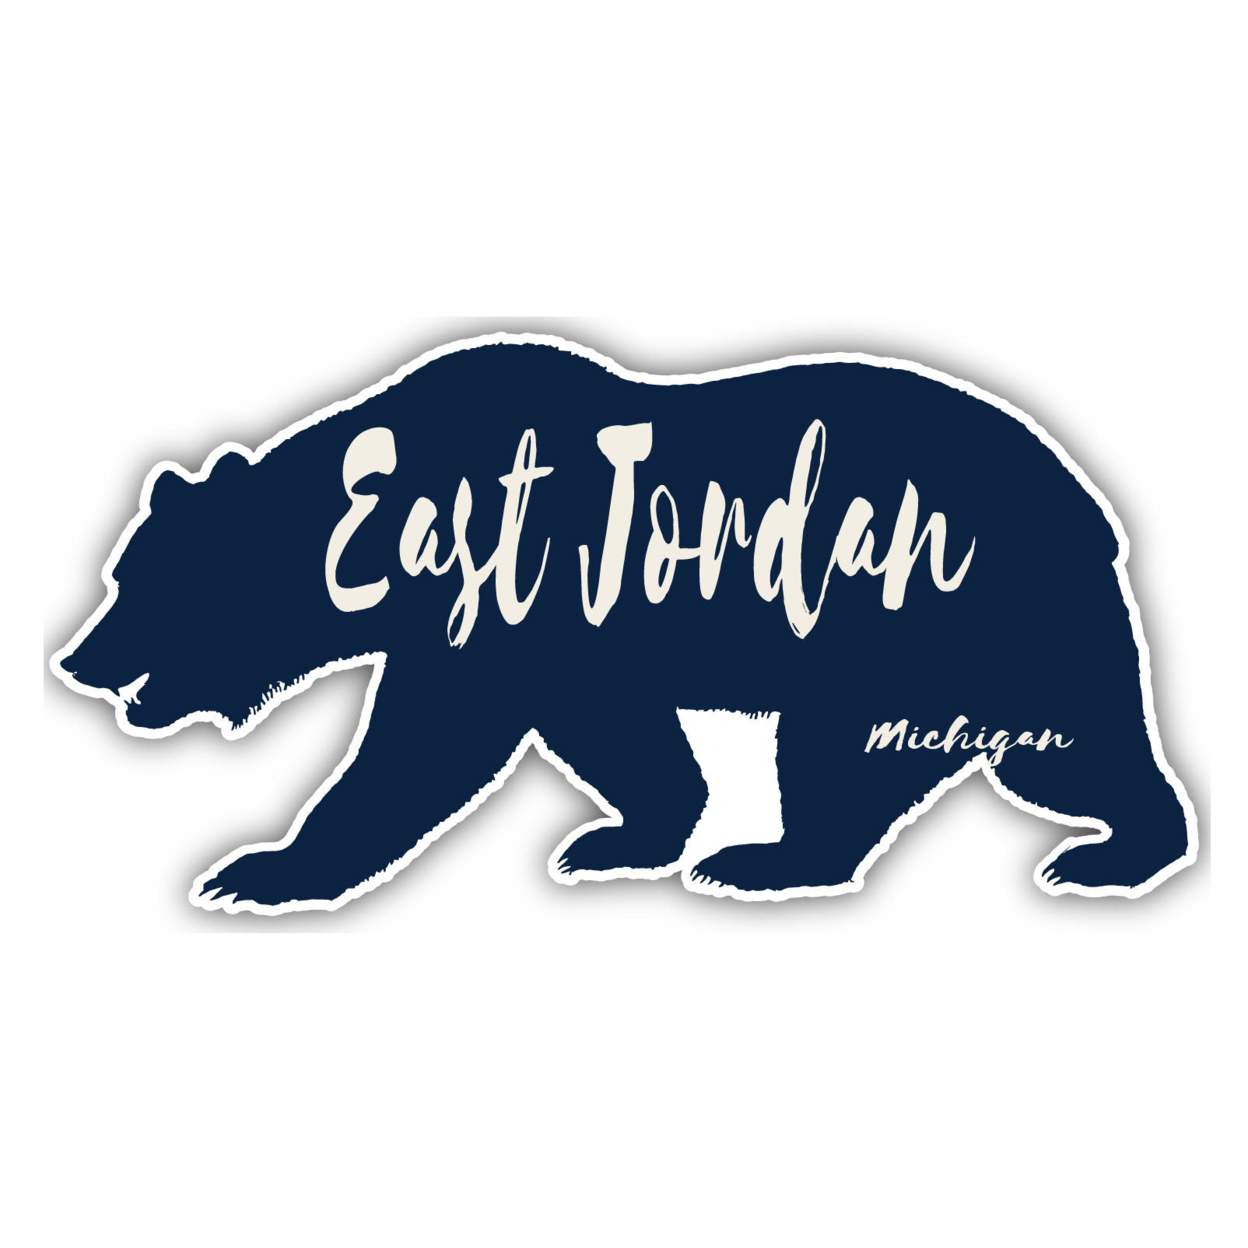 East Jordan Michigan Souvenir Decorative Stickers (Choose Theme And Size) - 4-Pack, 4-Inch, Bear